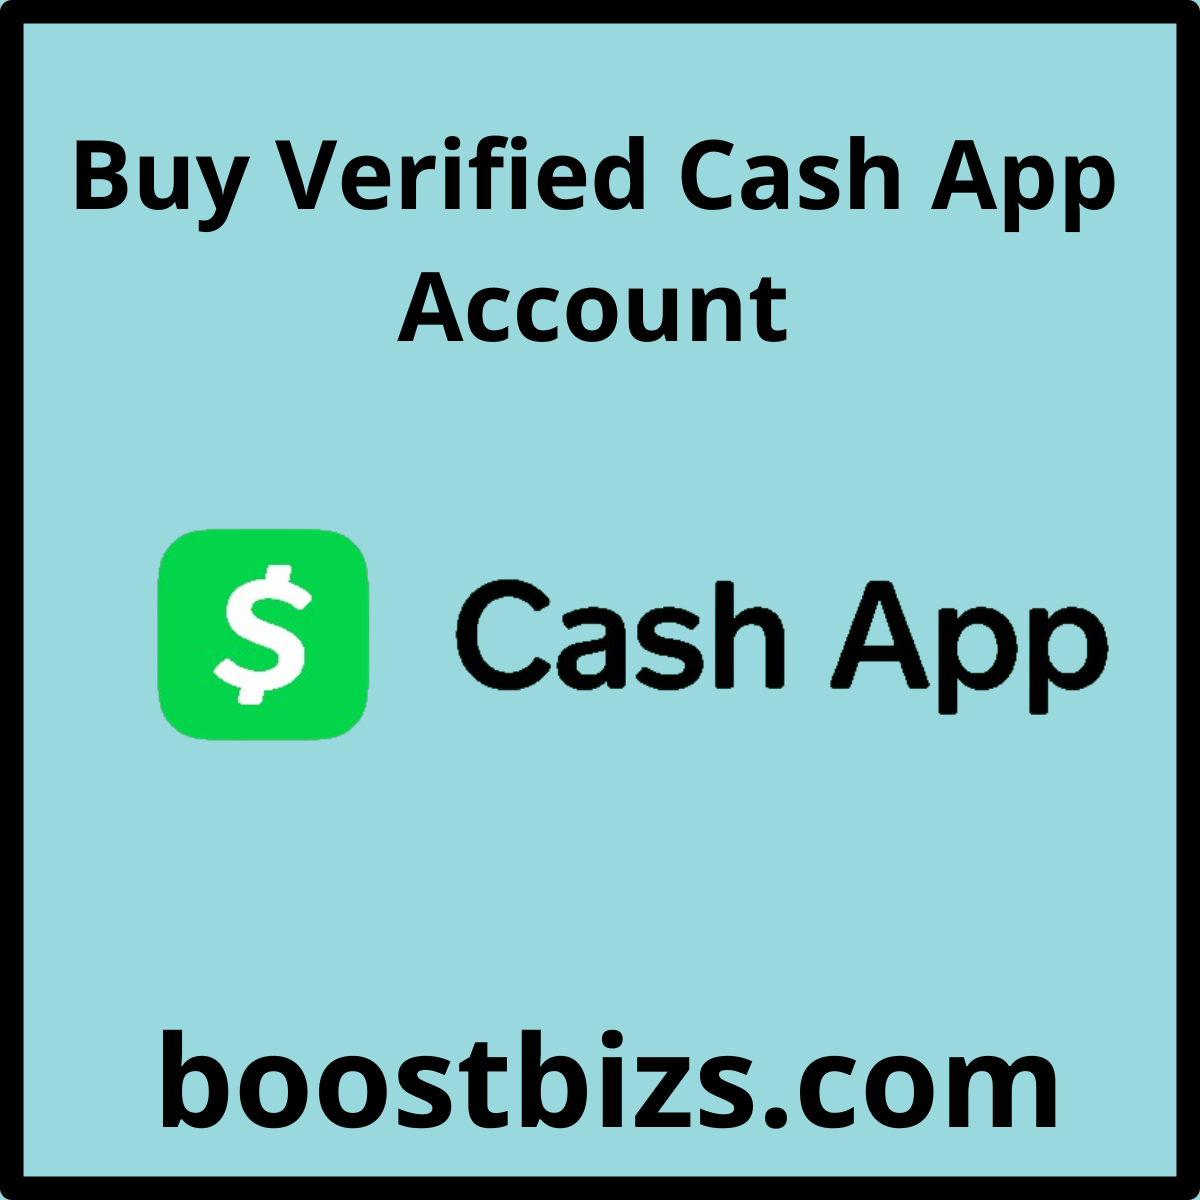 Buy Verified Cash App Account - BOOSTBIZS